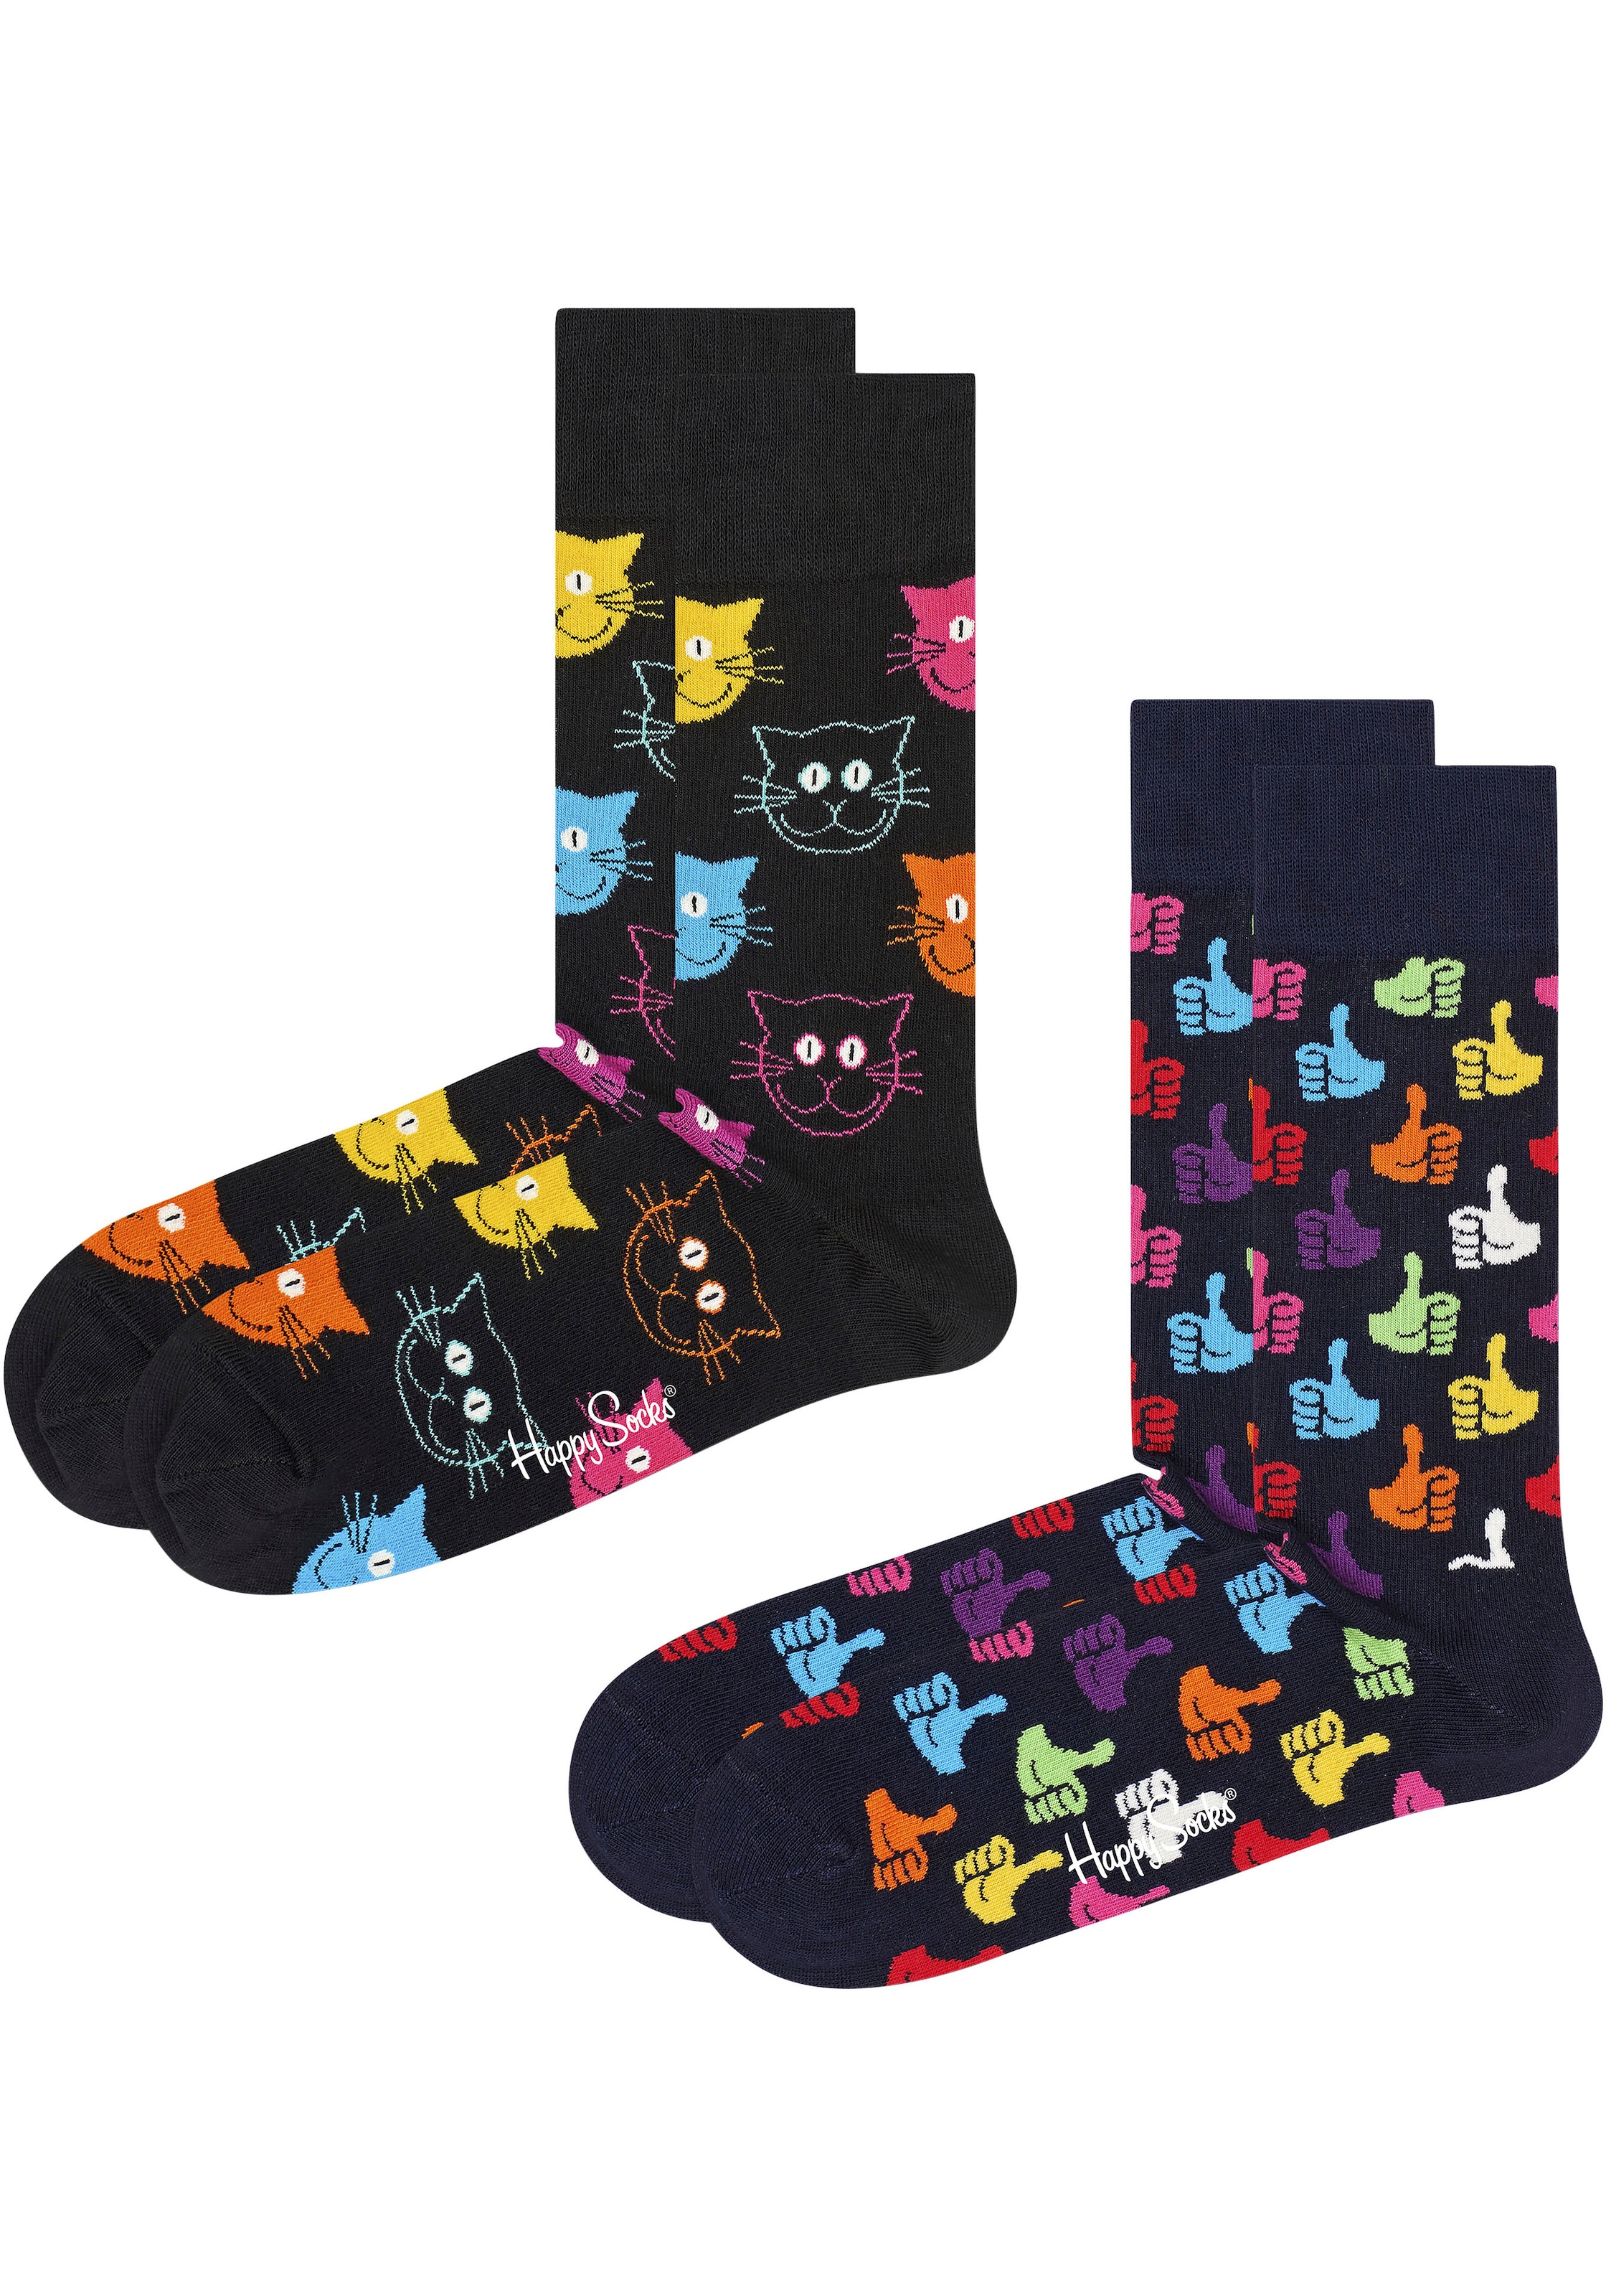 Happy Socks Socken, Cat & Thumbs Up Pack bestellen | I'm walking